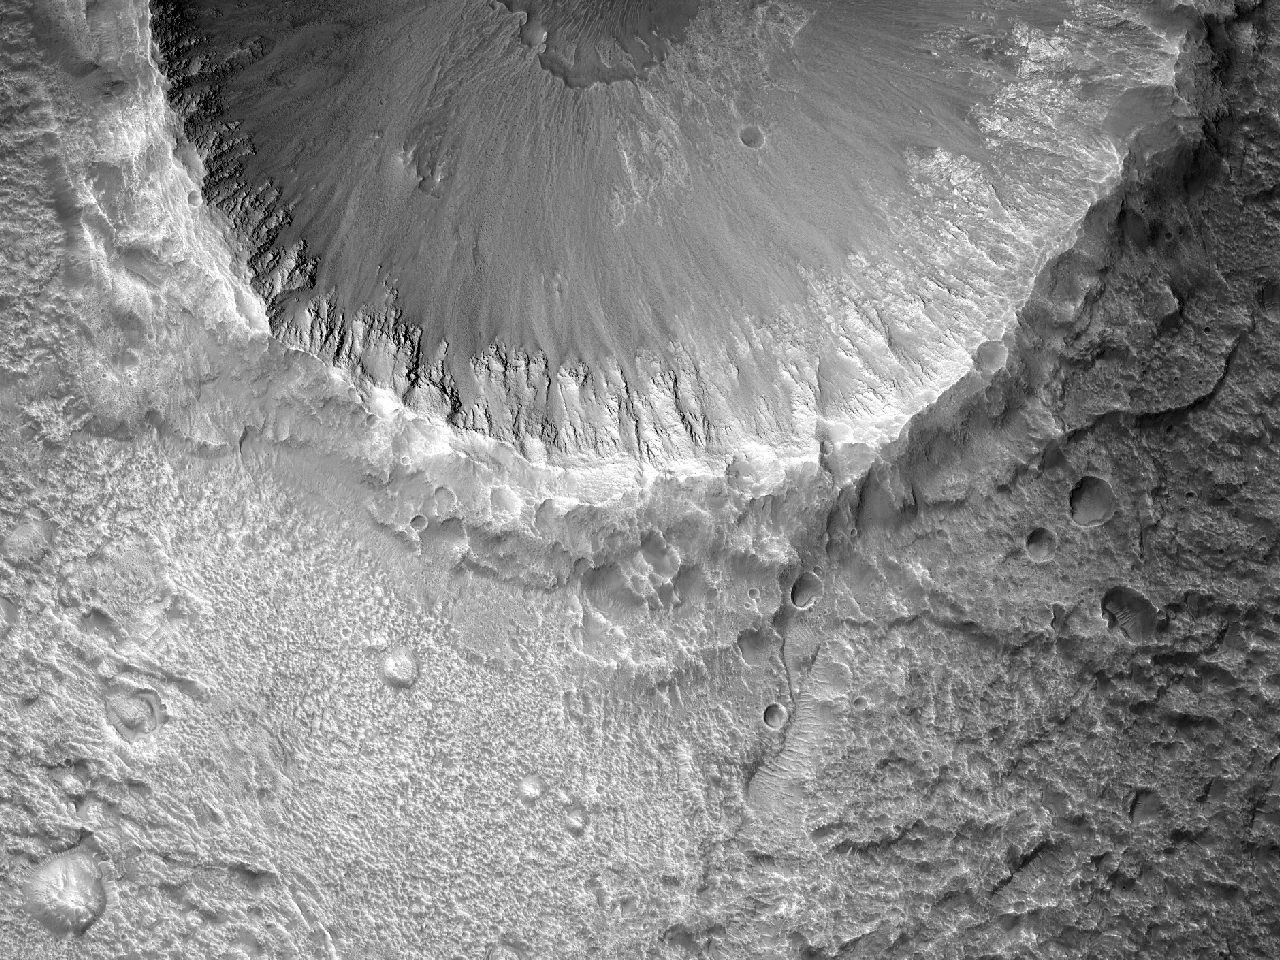 Exposio de material claro numa cratera de impacto